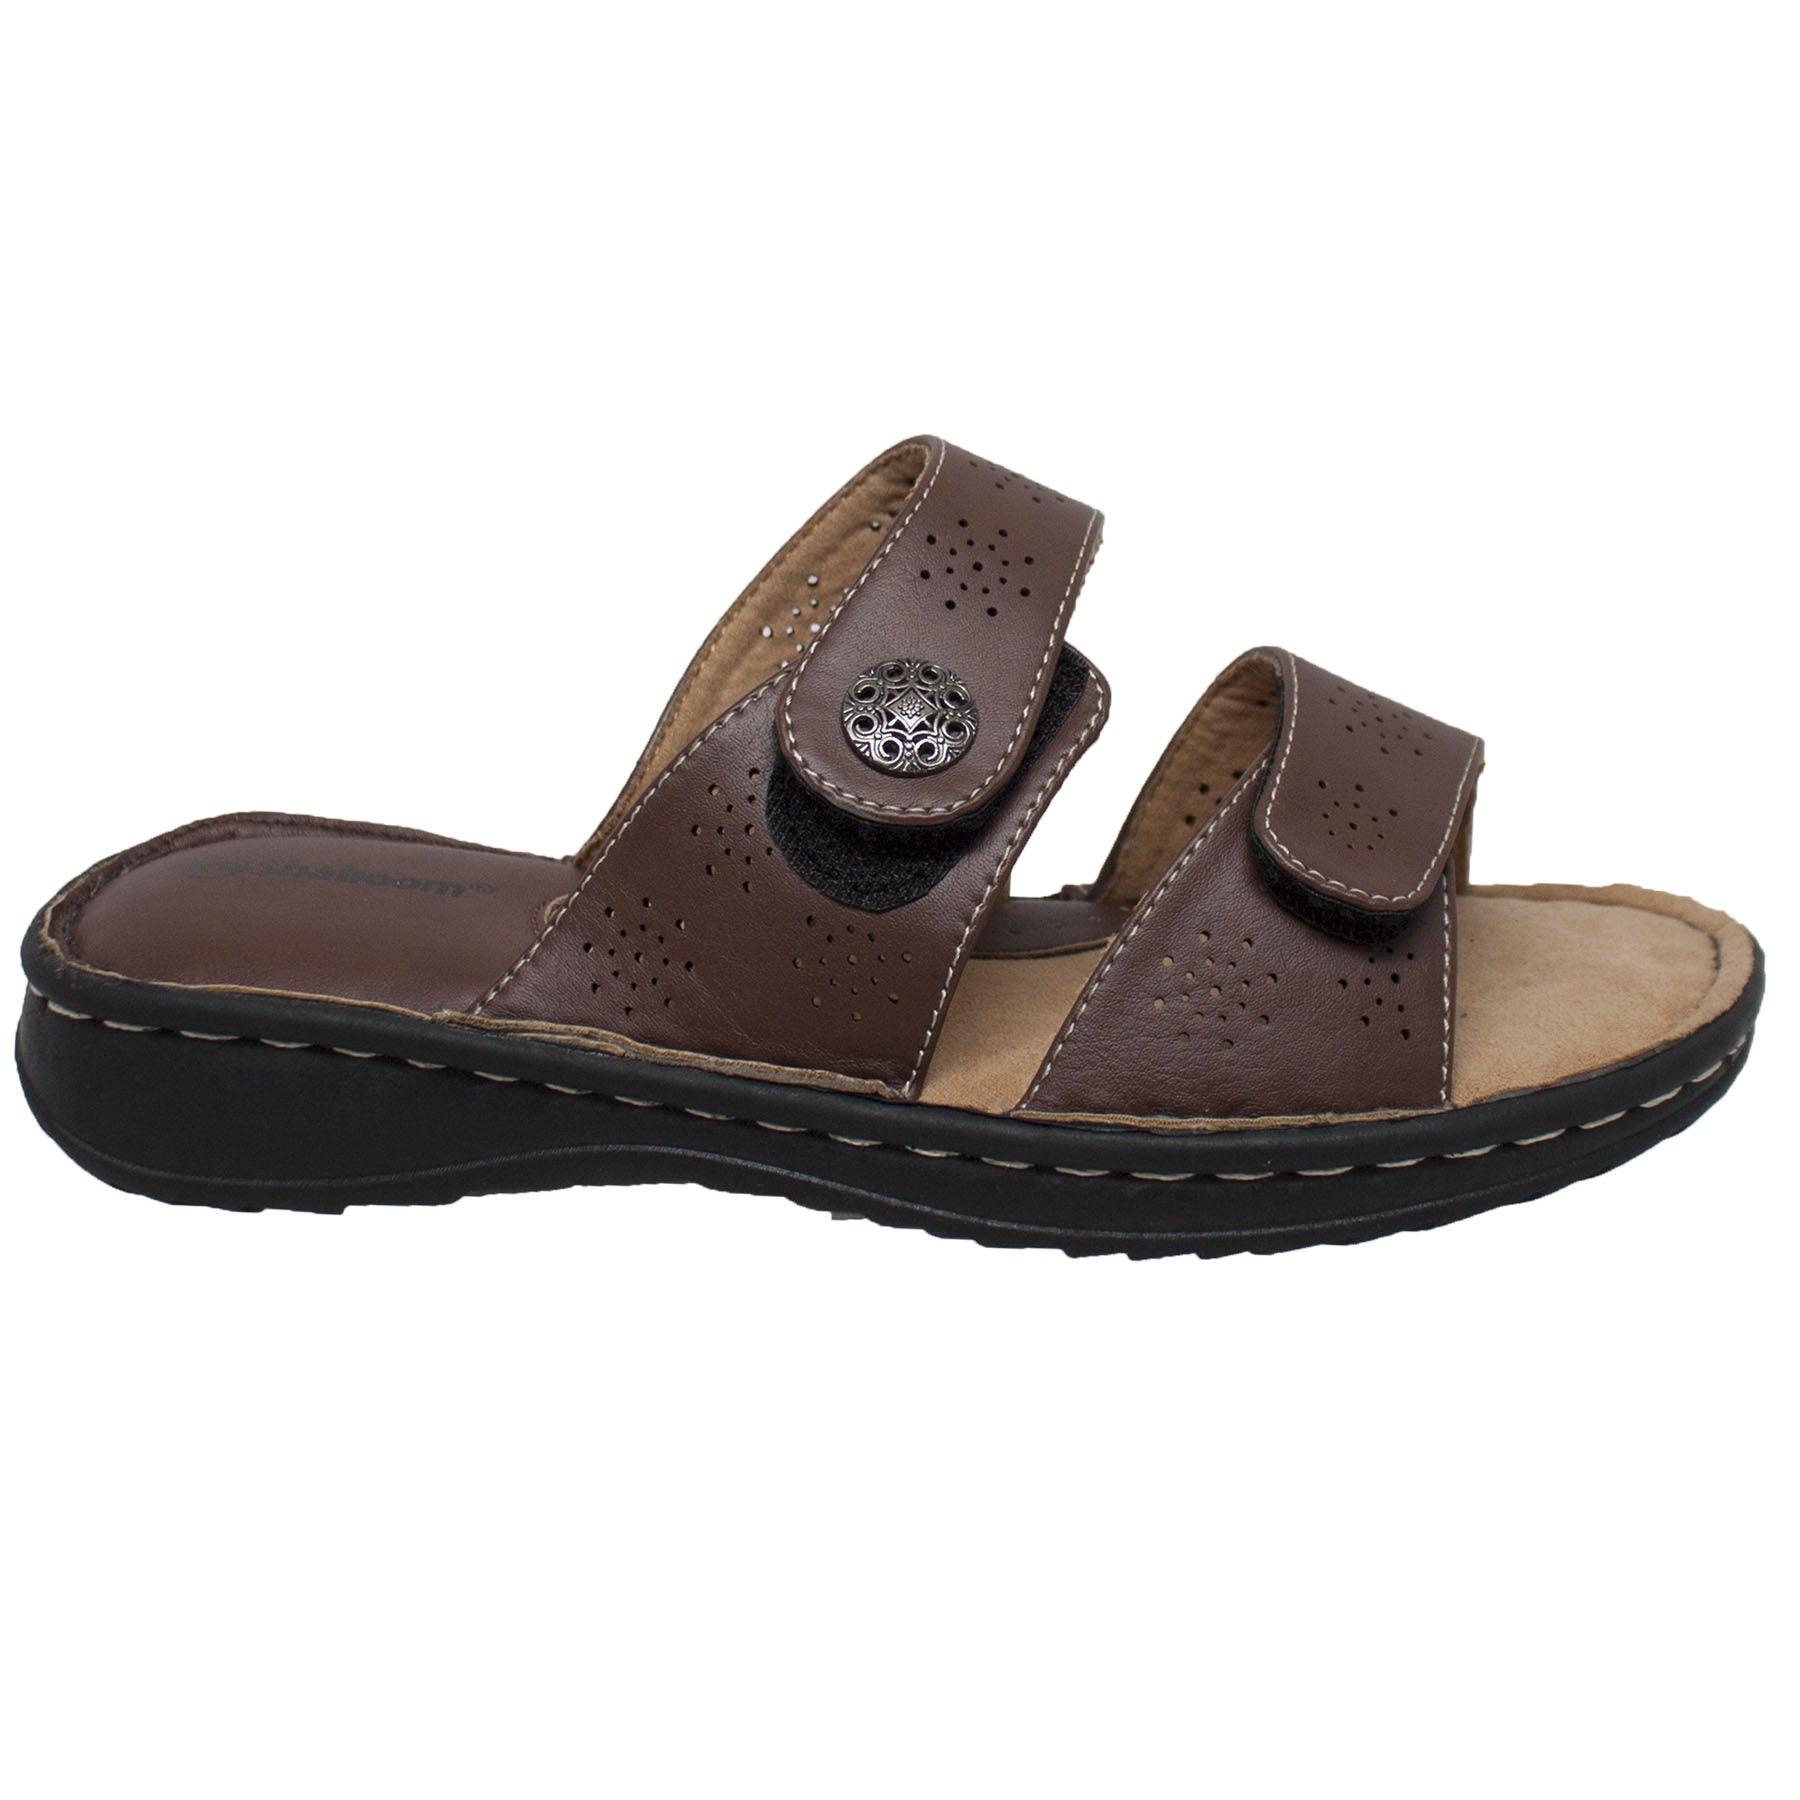 Shaboom Women's Comfort Slide Sandals Brown - Flyclothing LLC